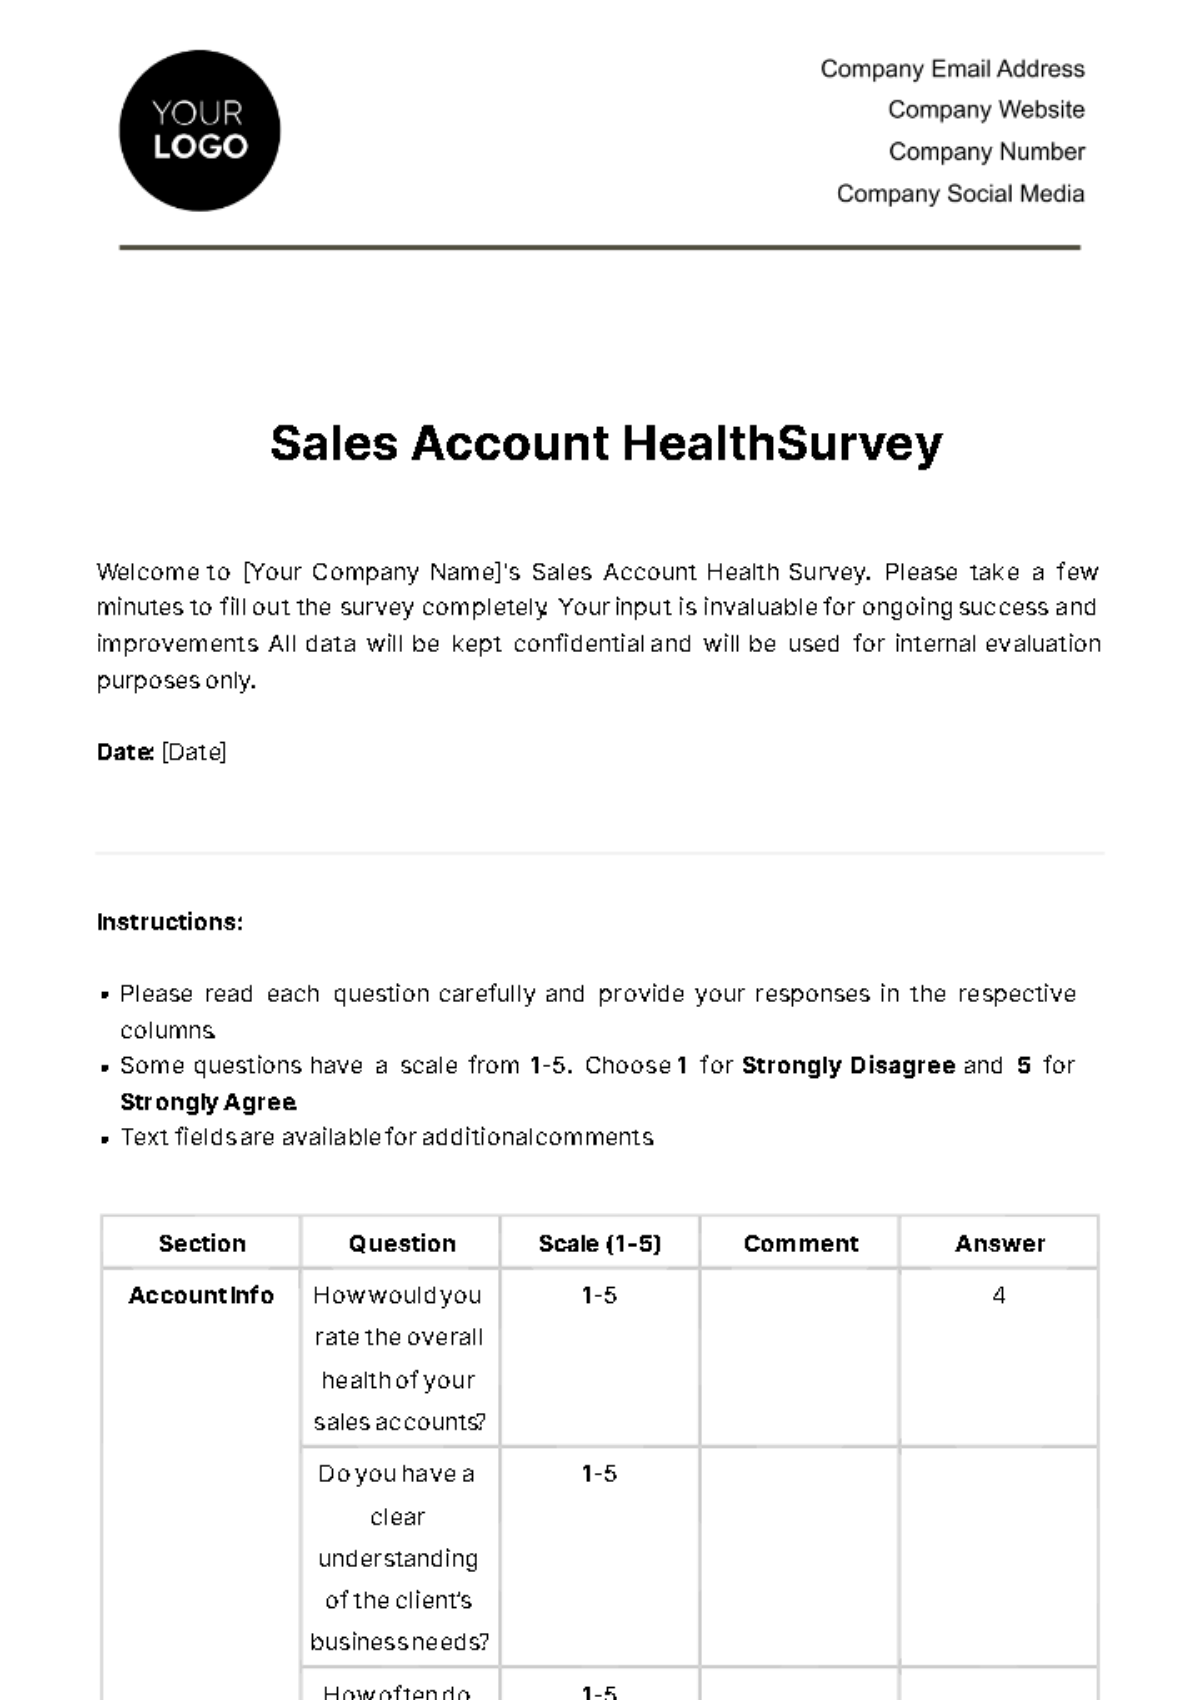 Sales Account Health Survey Template